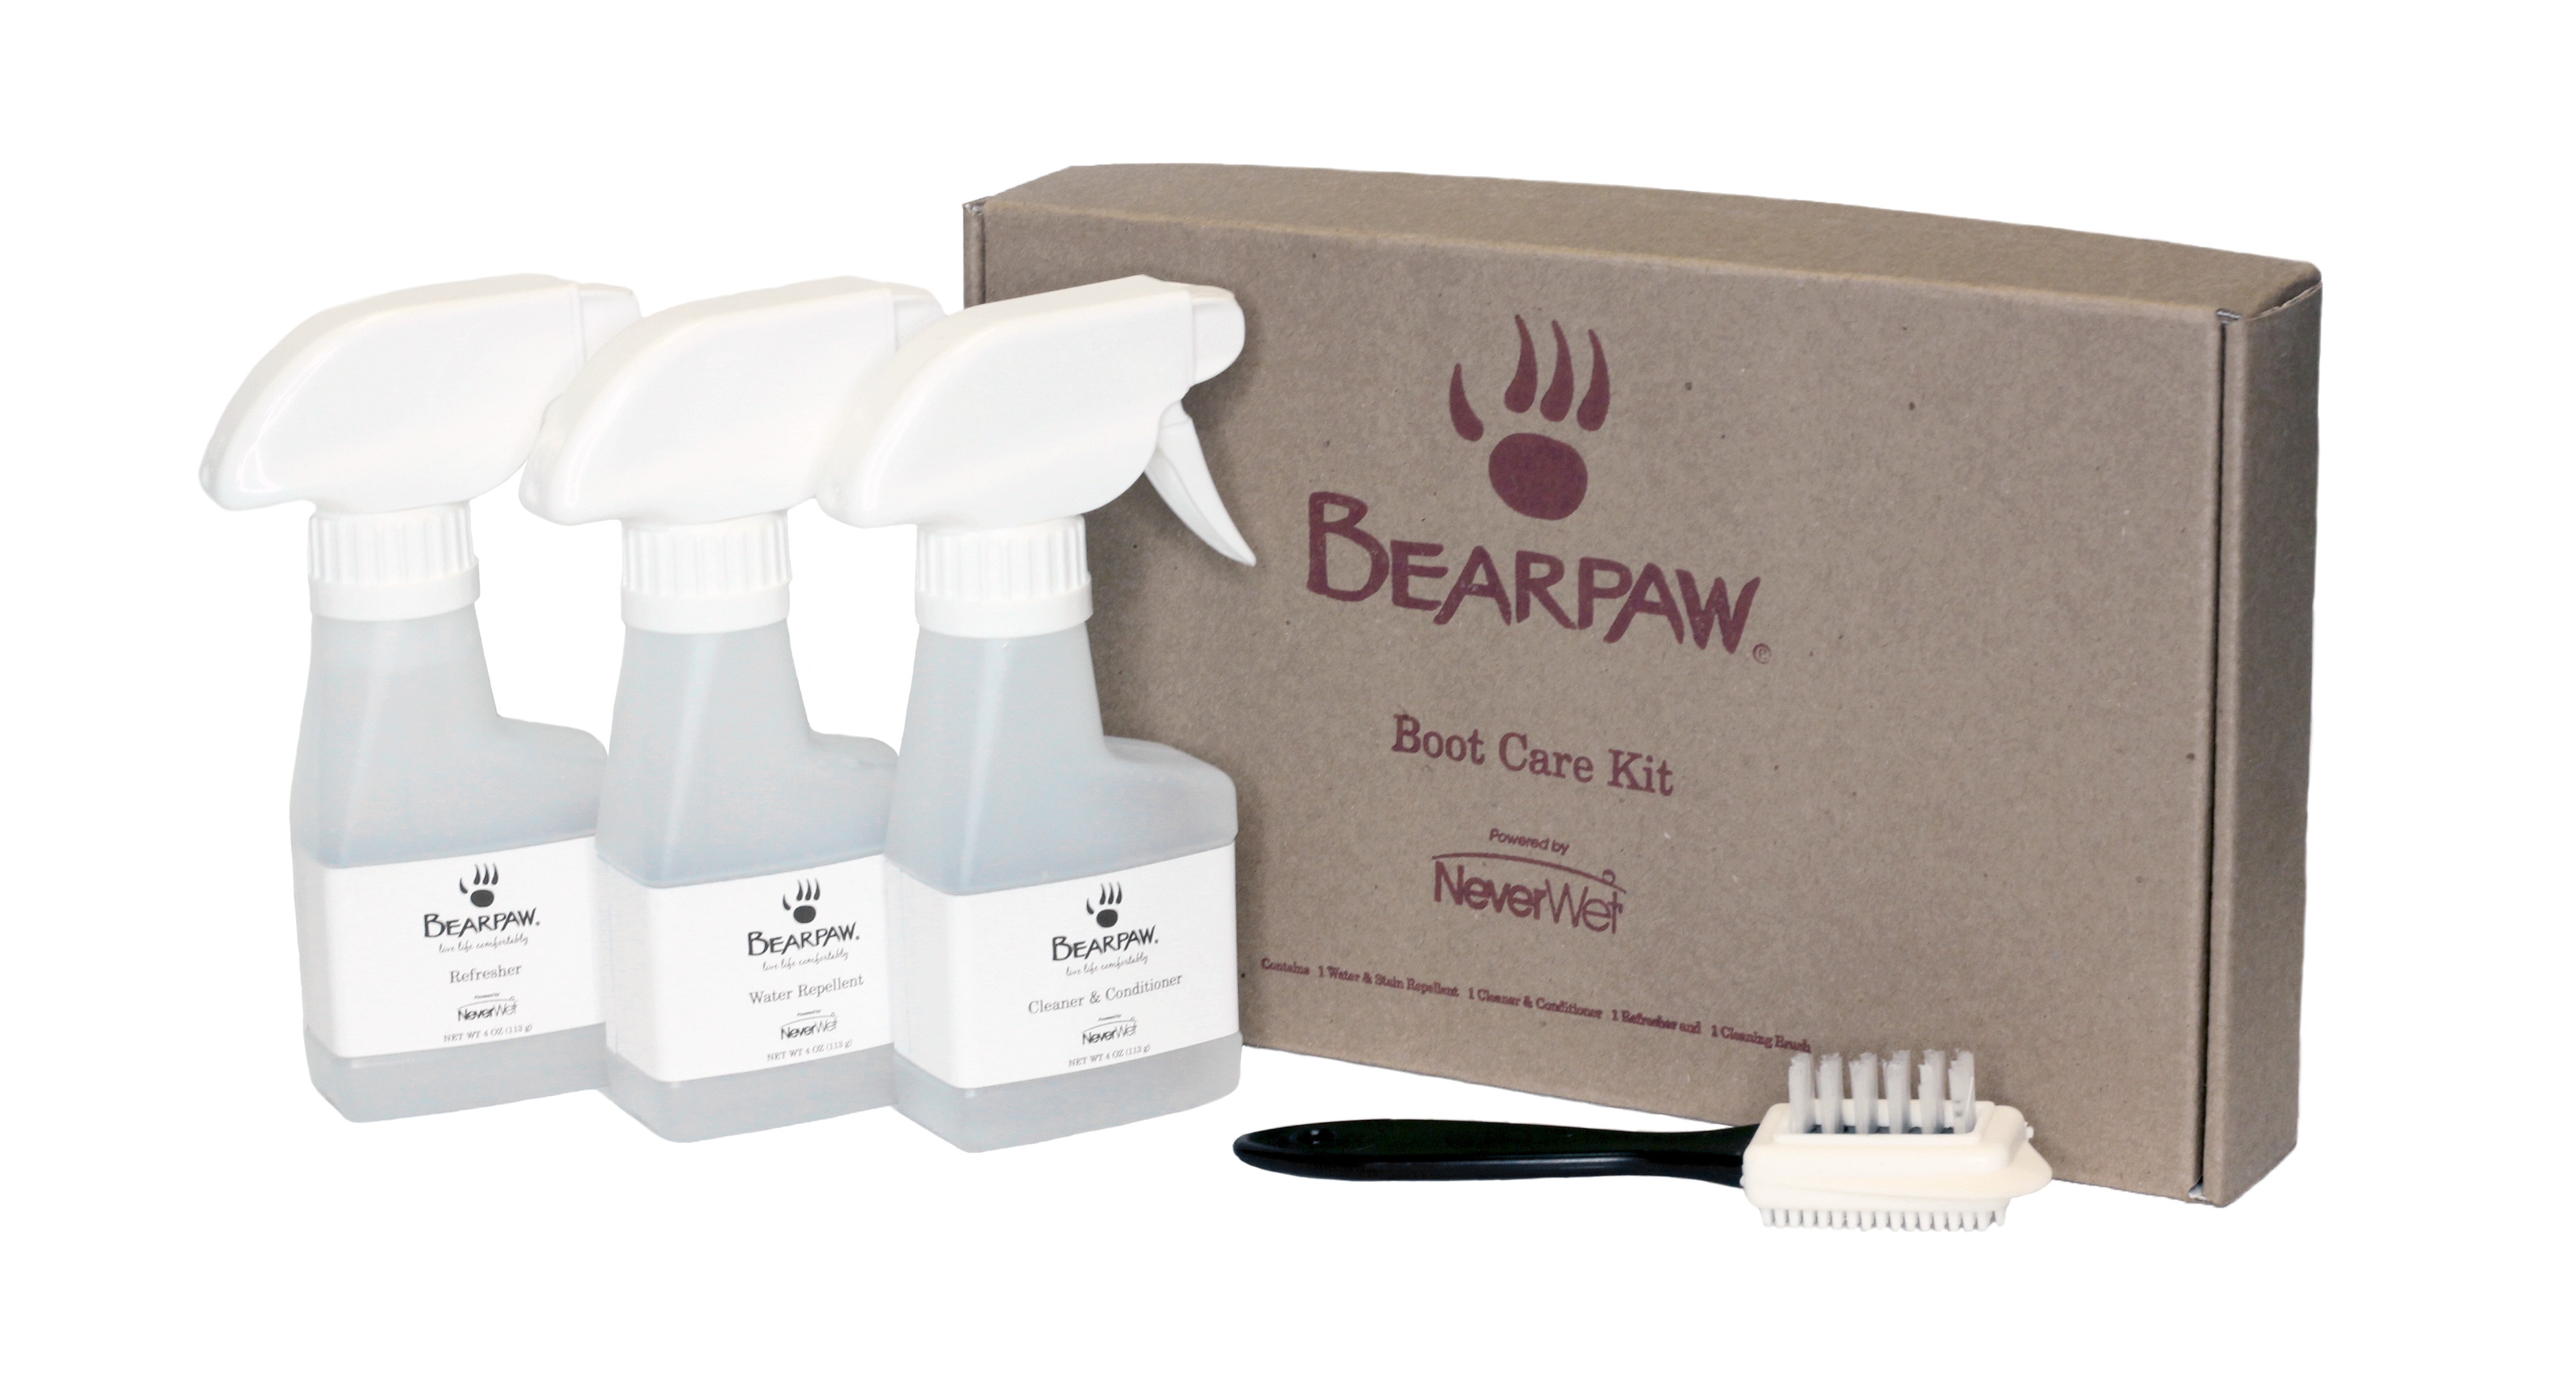 tsc.ca - BEARPAW NeverWet Shoe Cleaning Kit